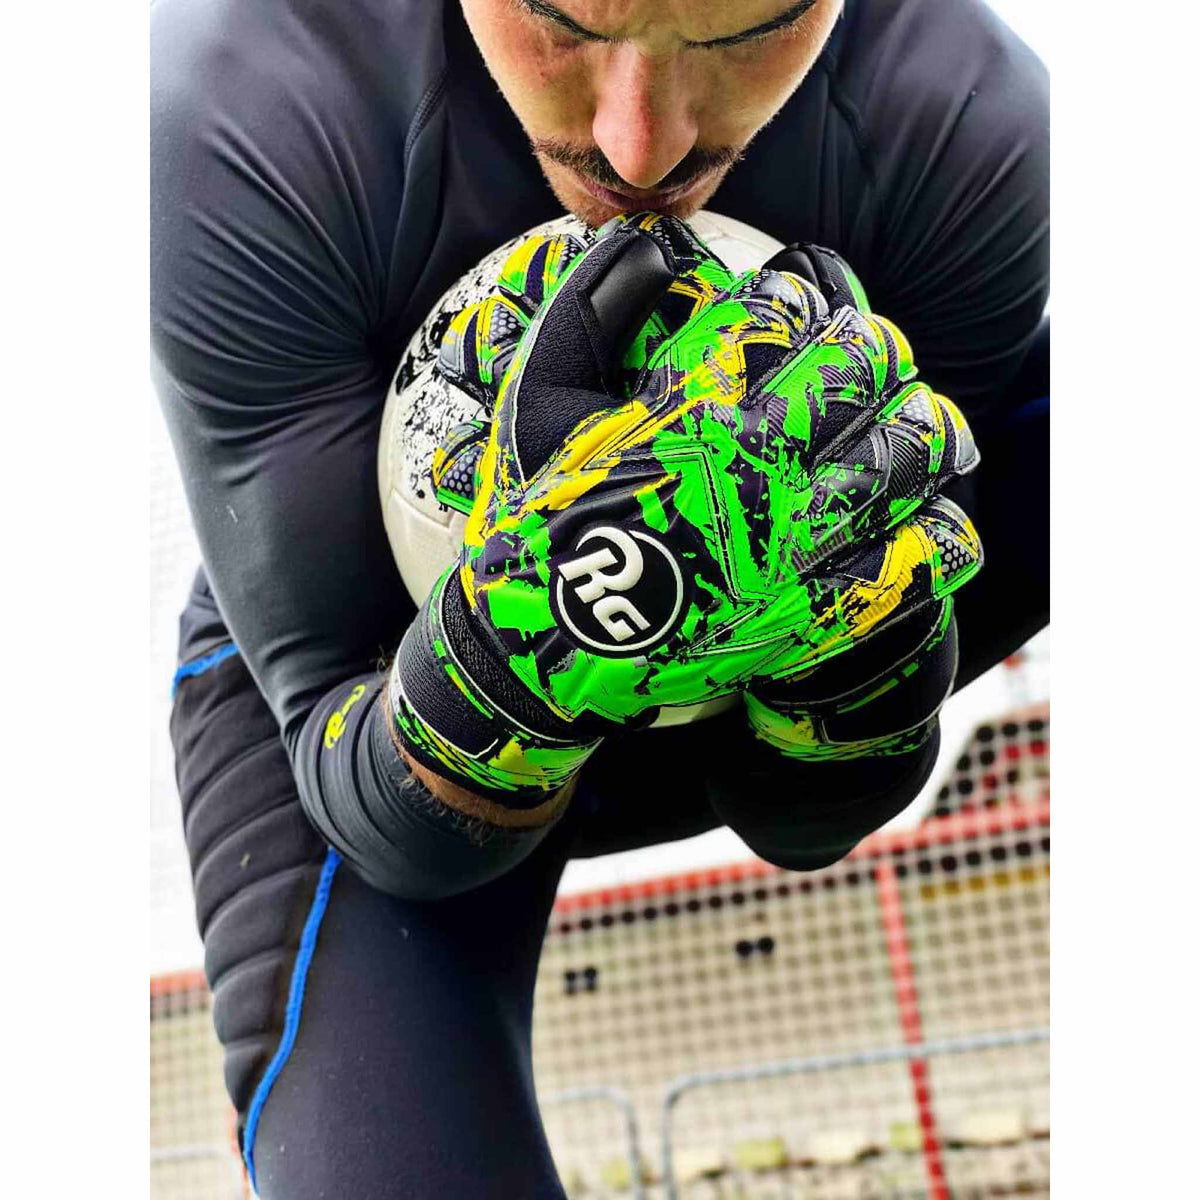 RG Aspro 4TRAIN gants de gardien de but de soccerfingersaves - live 3